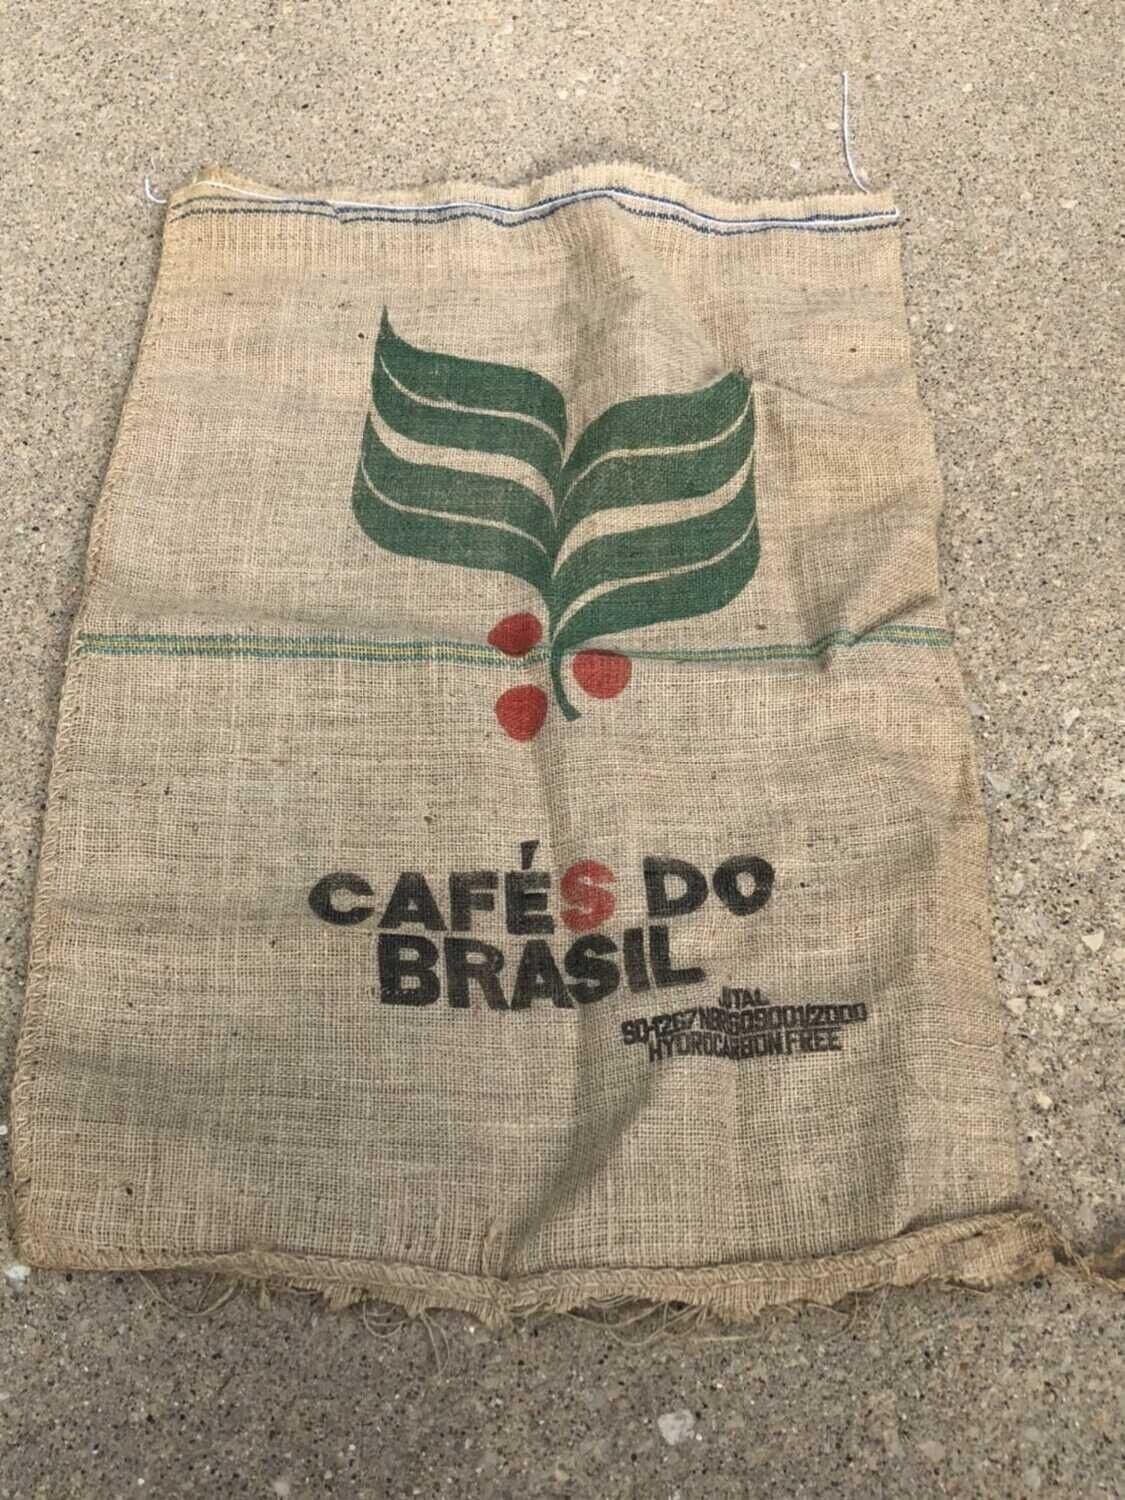 Cafes Do Brasil brand coffee bean burlap bag